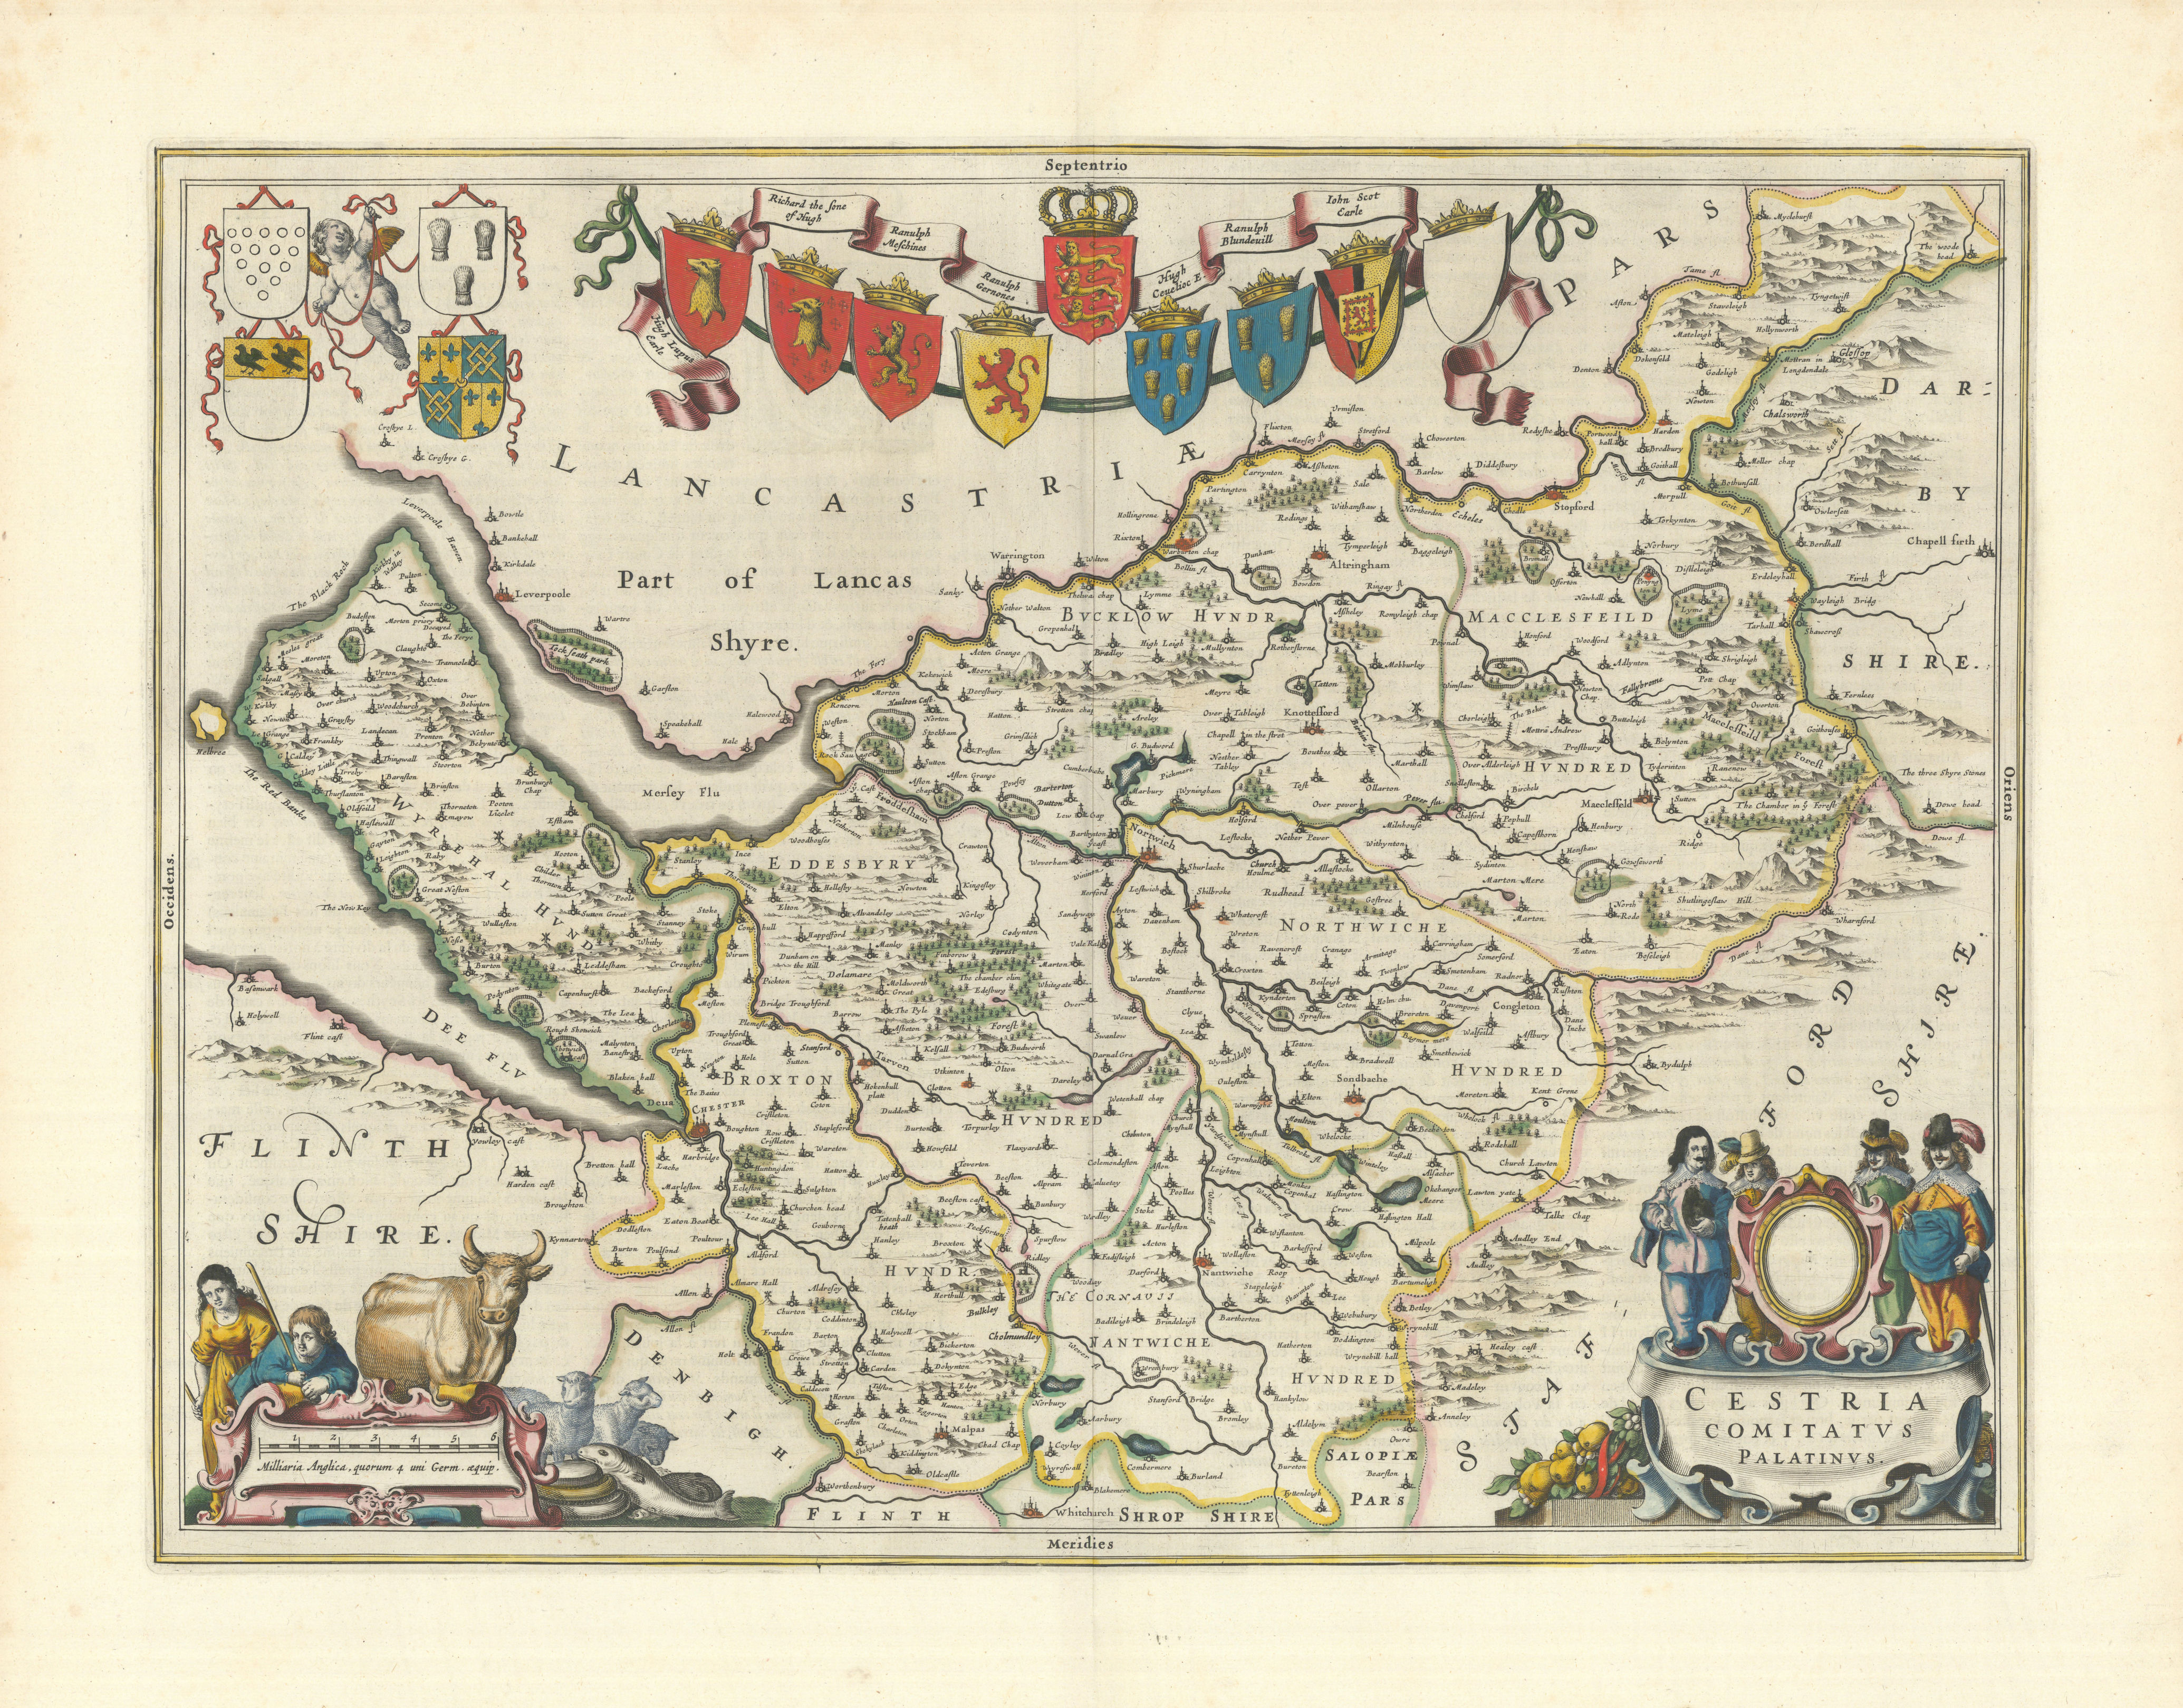 Associate Product Cestria Comitatus Palatinus. Cheshire county map by Blaeu 1645 old antique